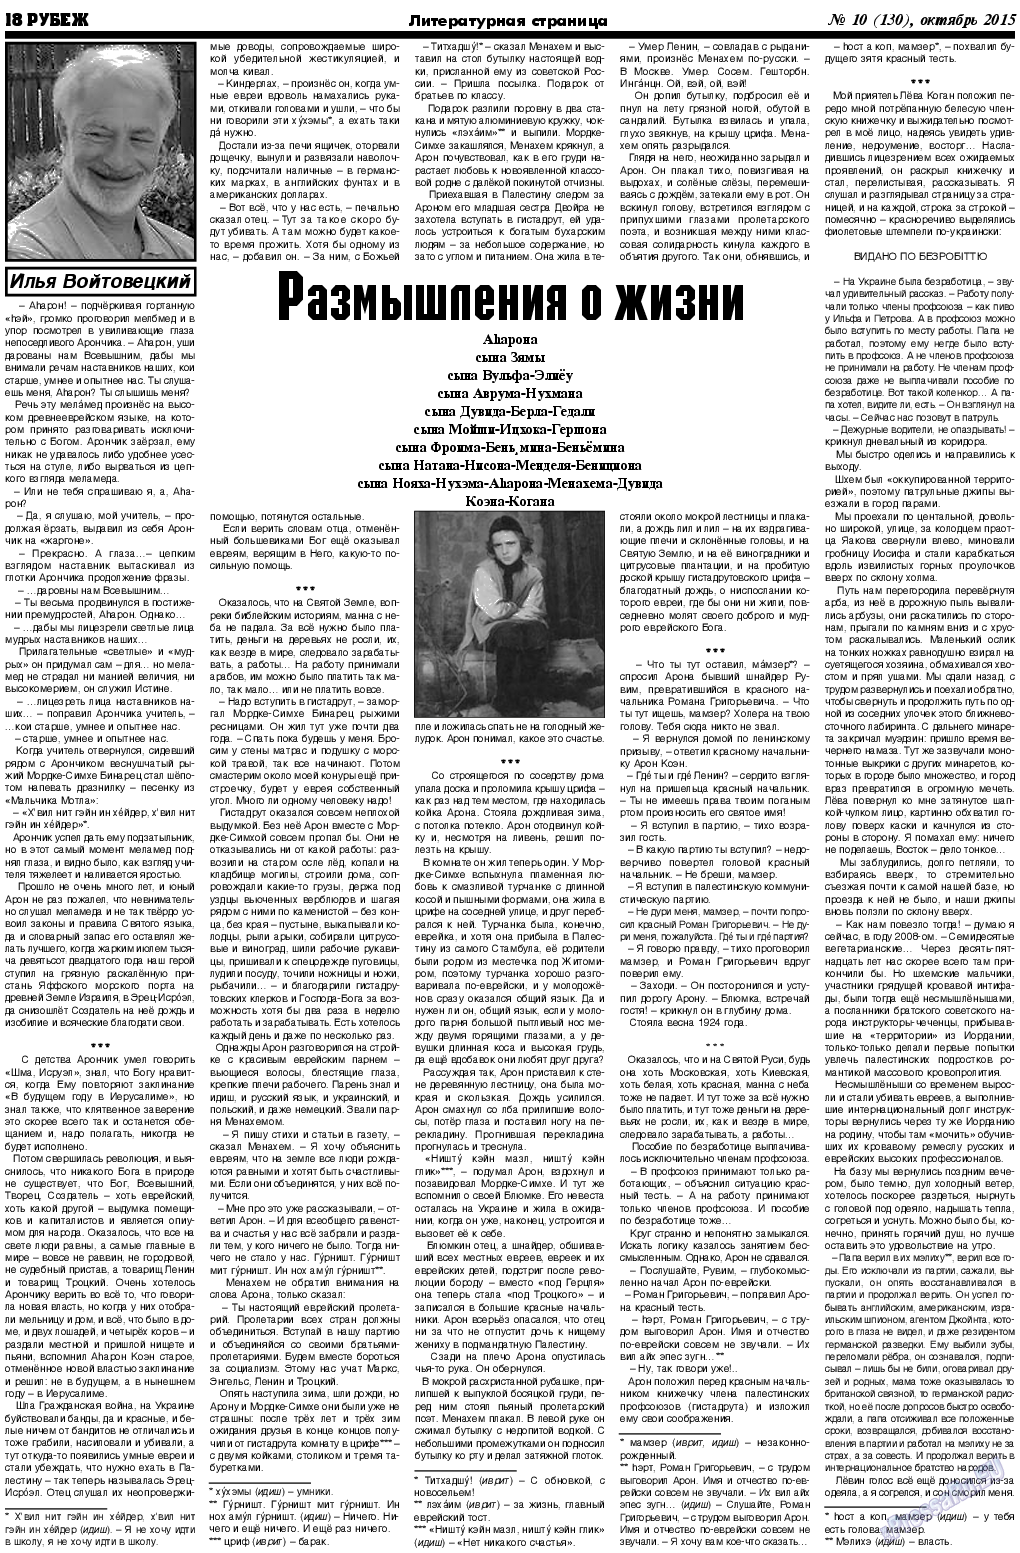 Рубеж, газета. 2015 №10 стр.18